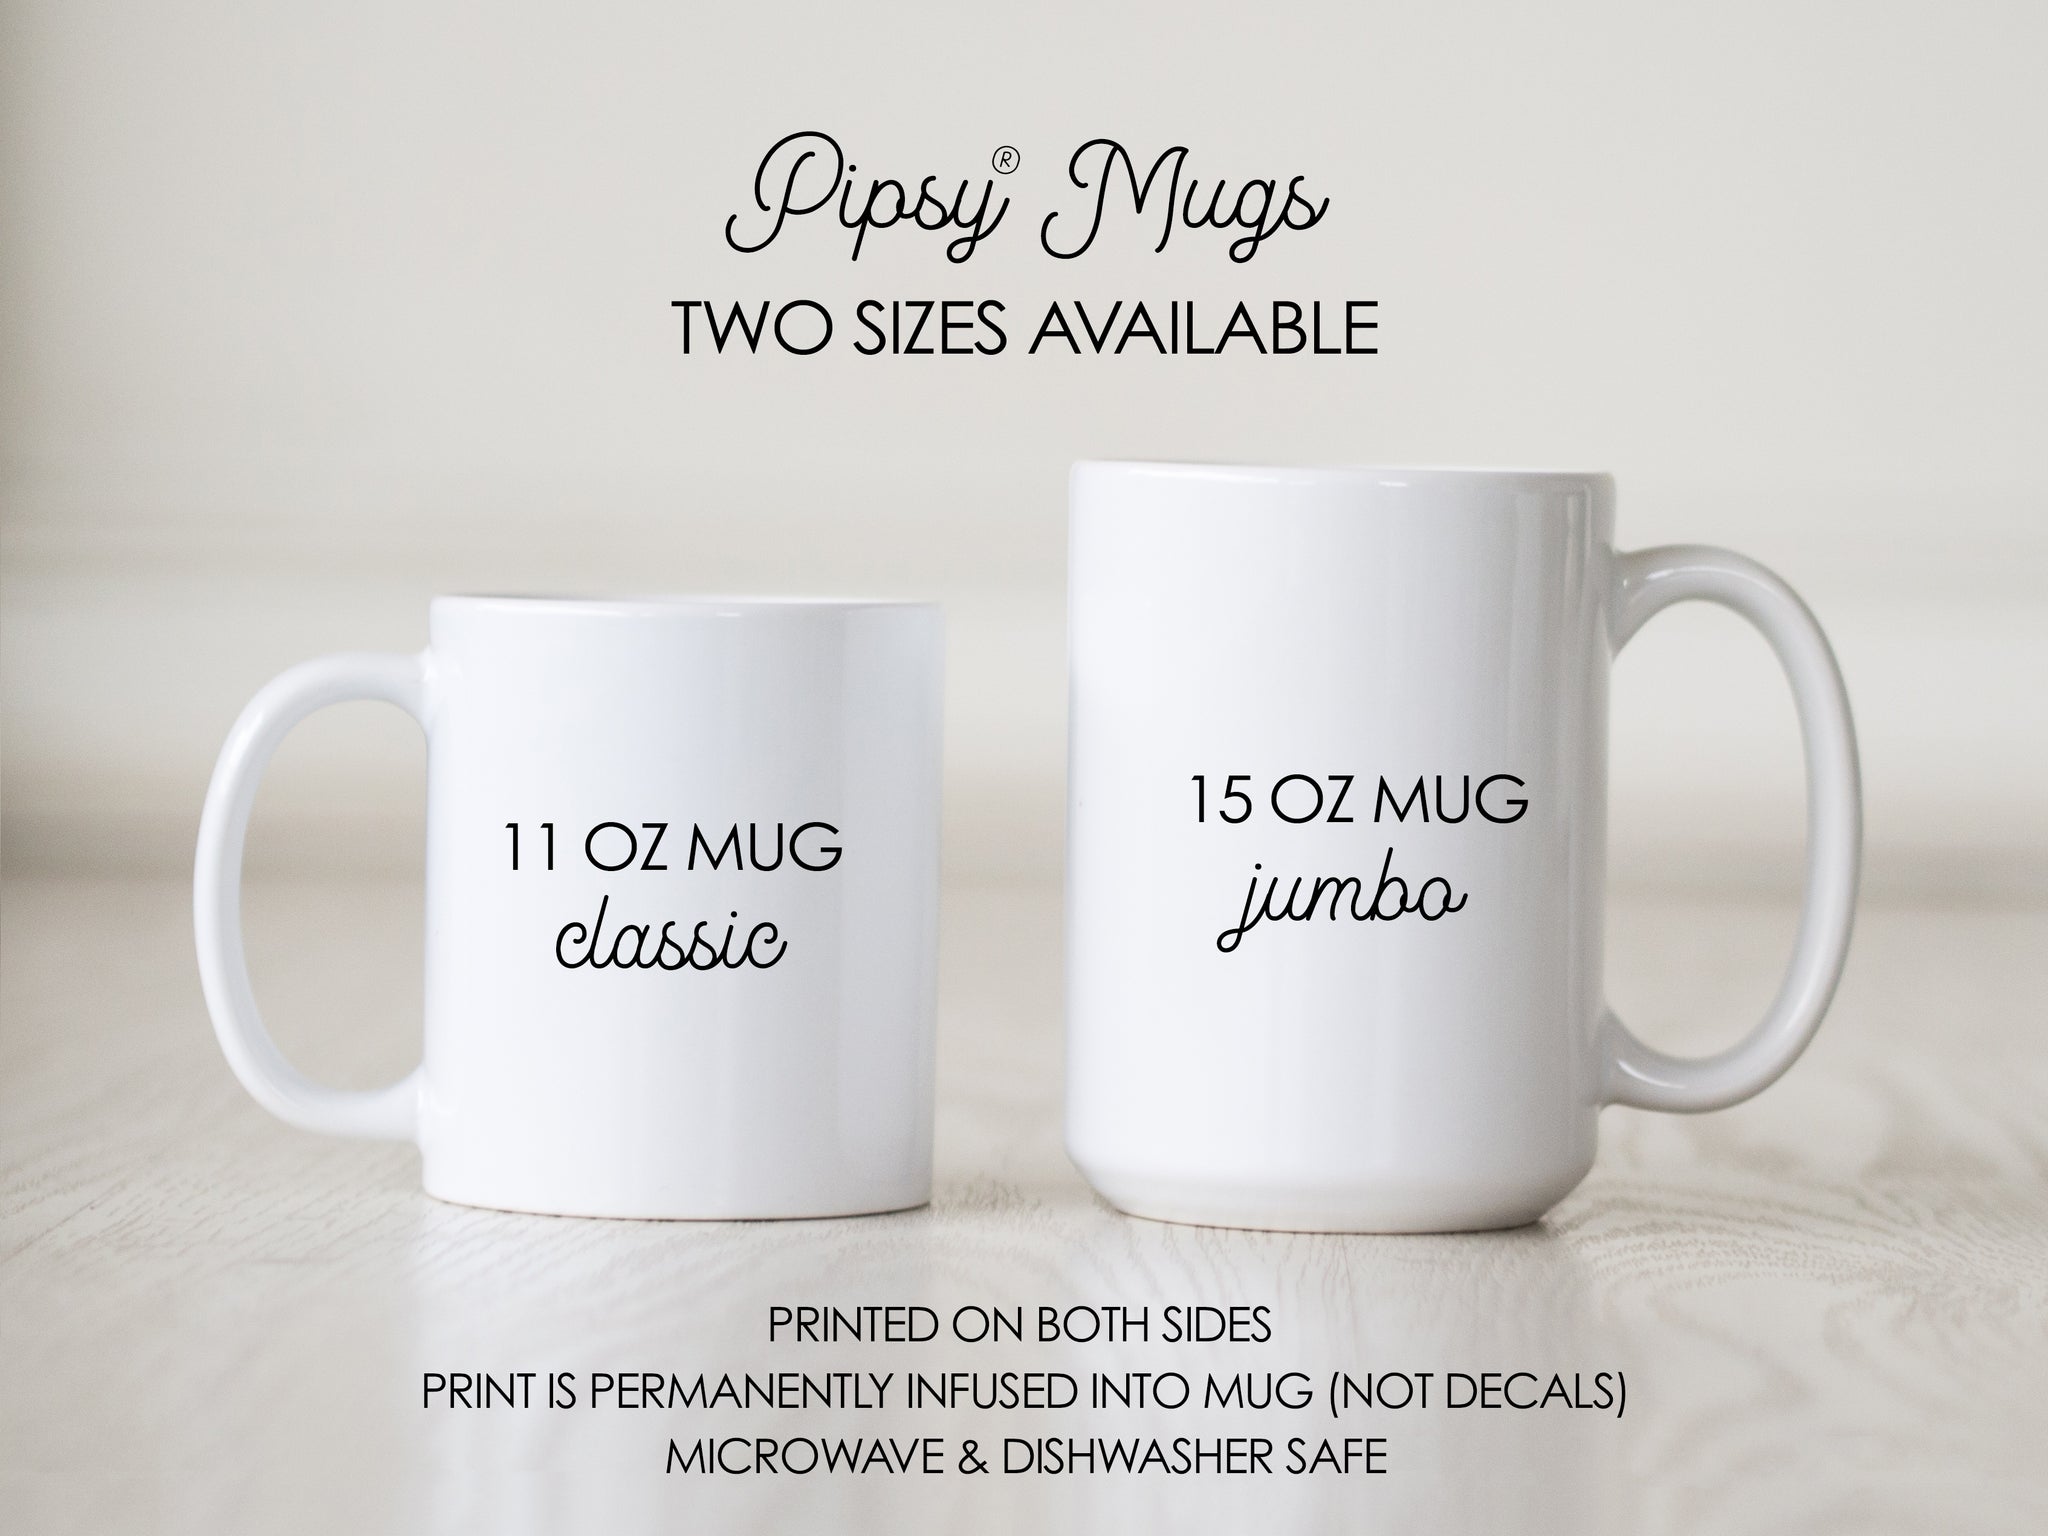  Hello Gorgeous Mug - Handmade Cute Coffee Cups for